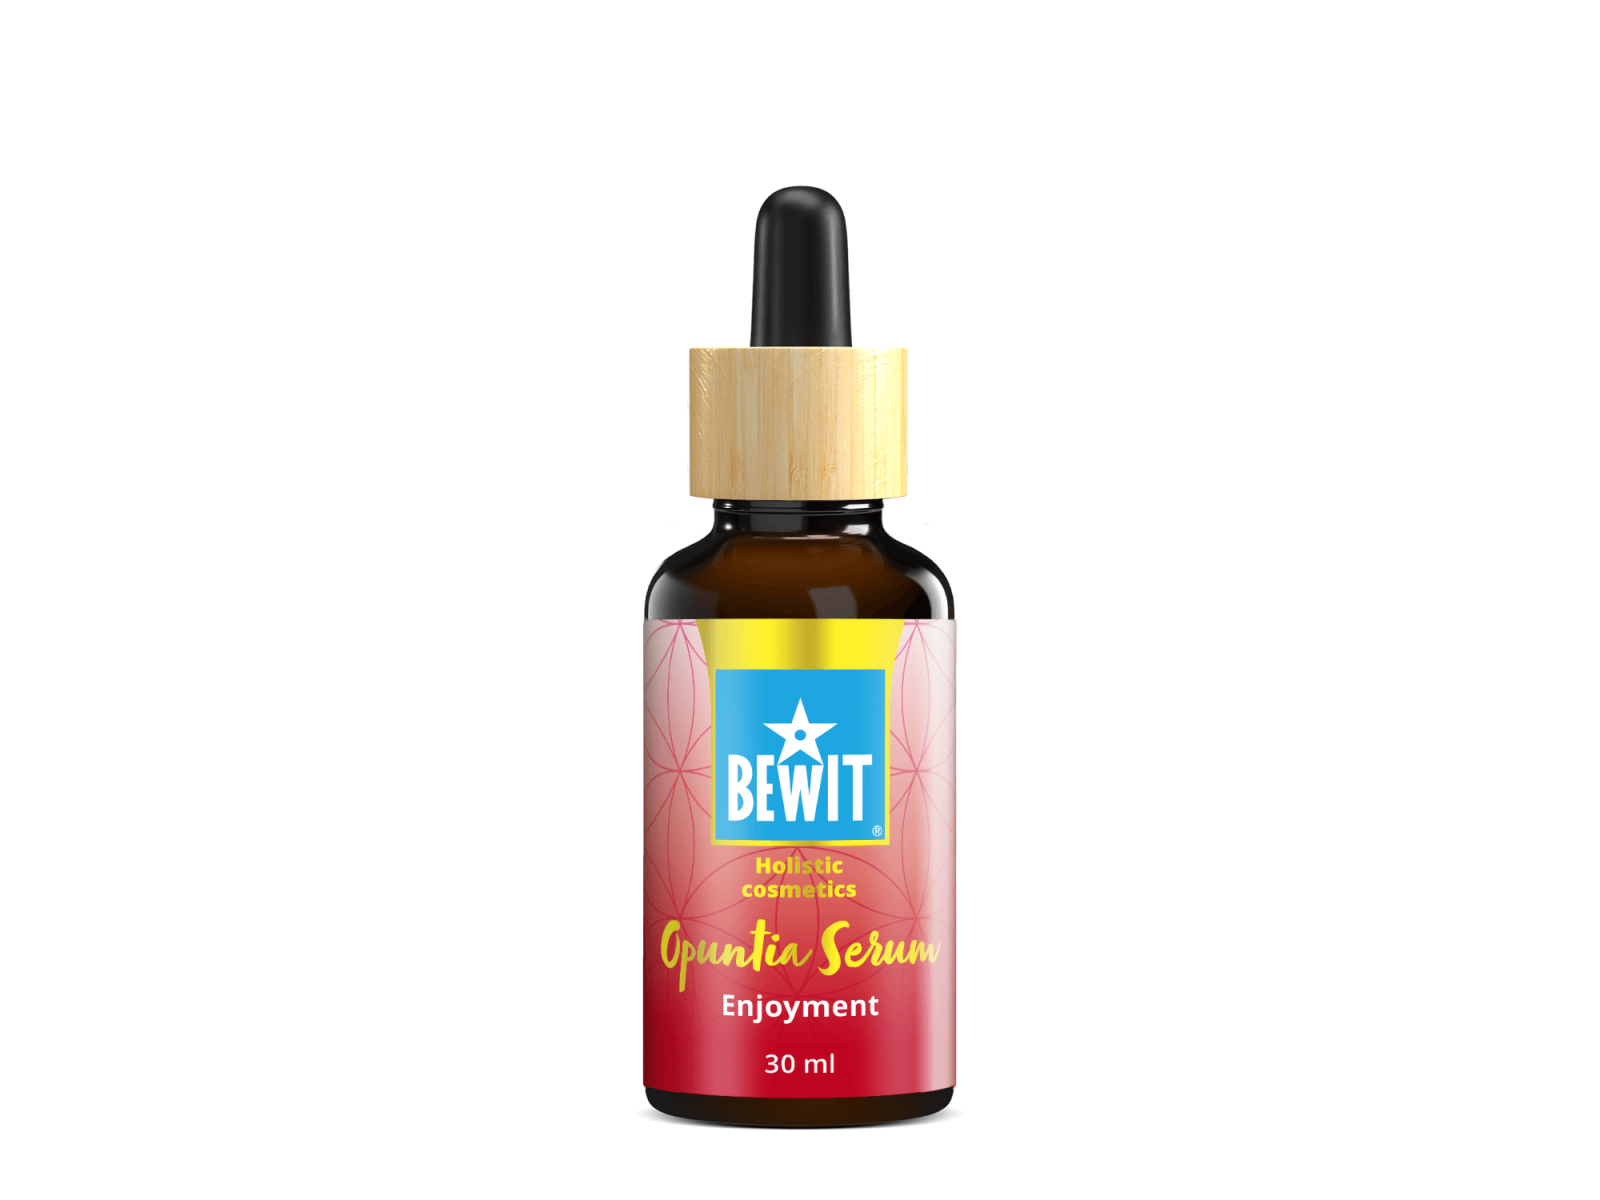 BEWIT Opuntia Serum Enjoyment - Hedvábné opunciové sérum s obsahem neroli, frangipani, champaky, skvalenu a astaxanthinu - 1